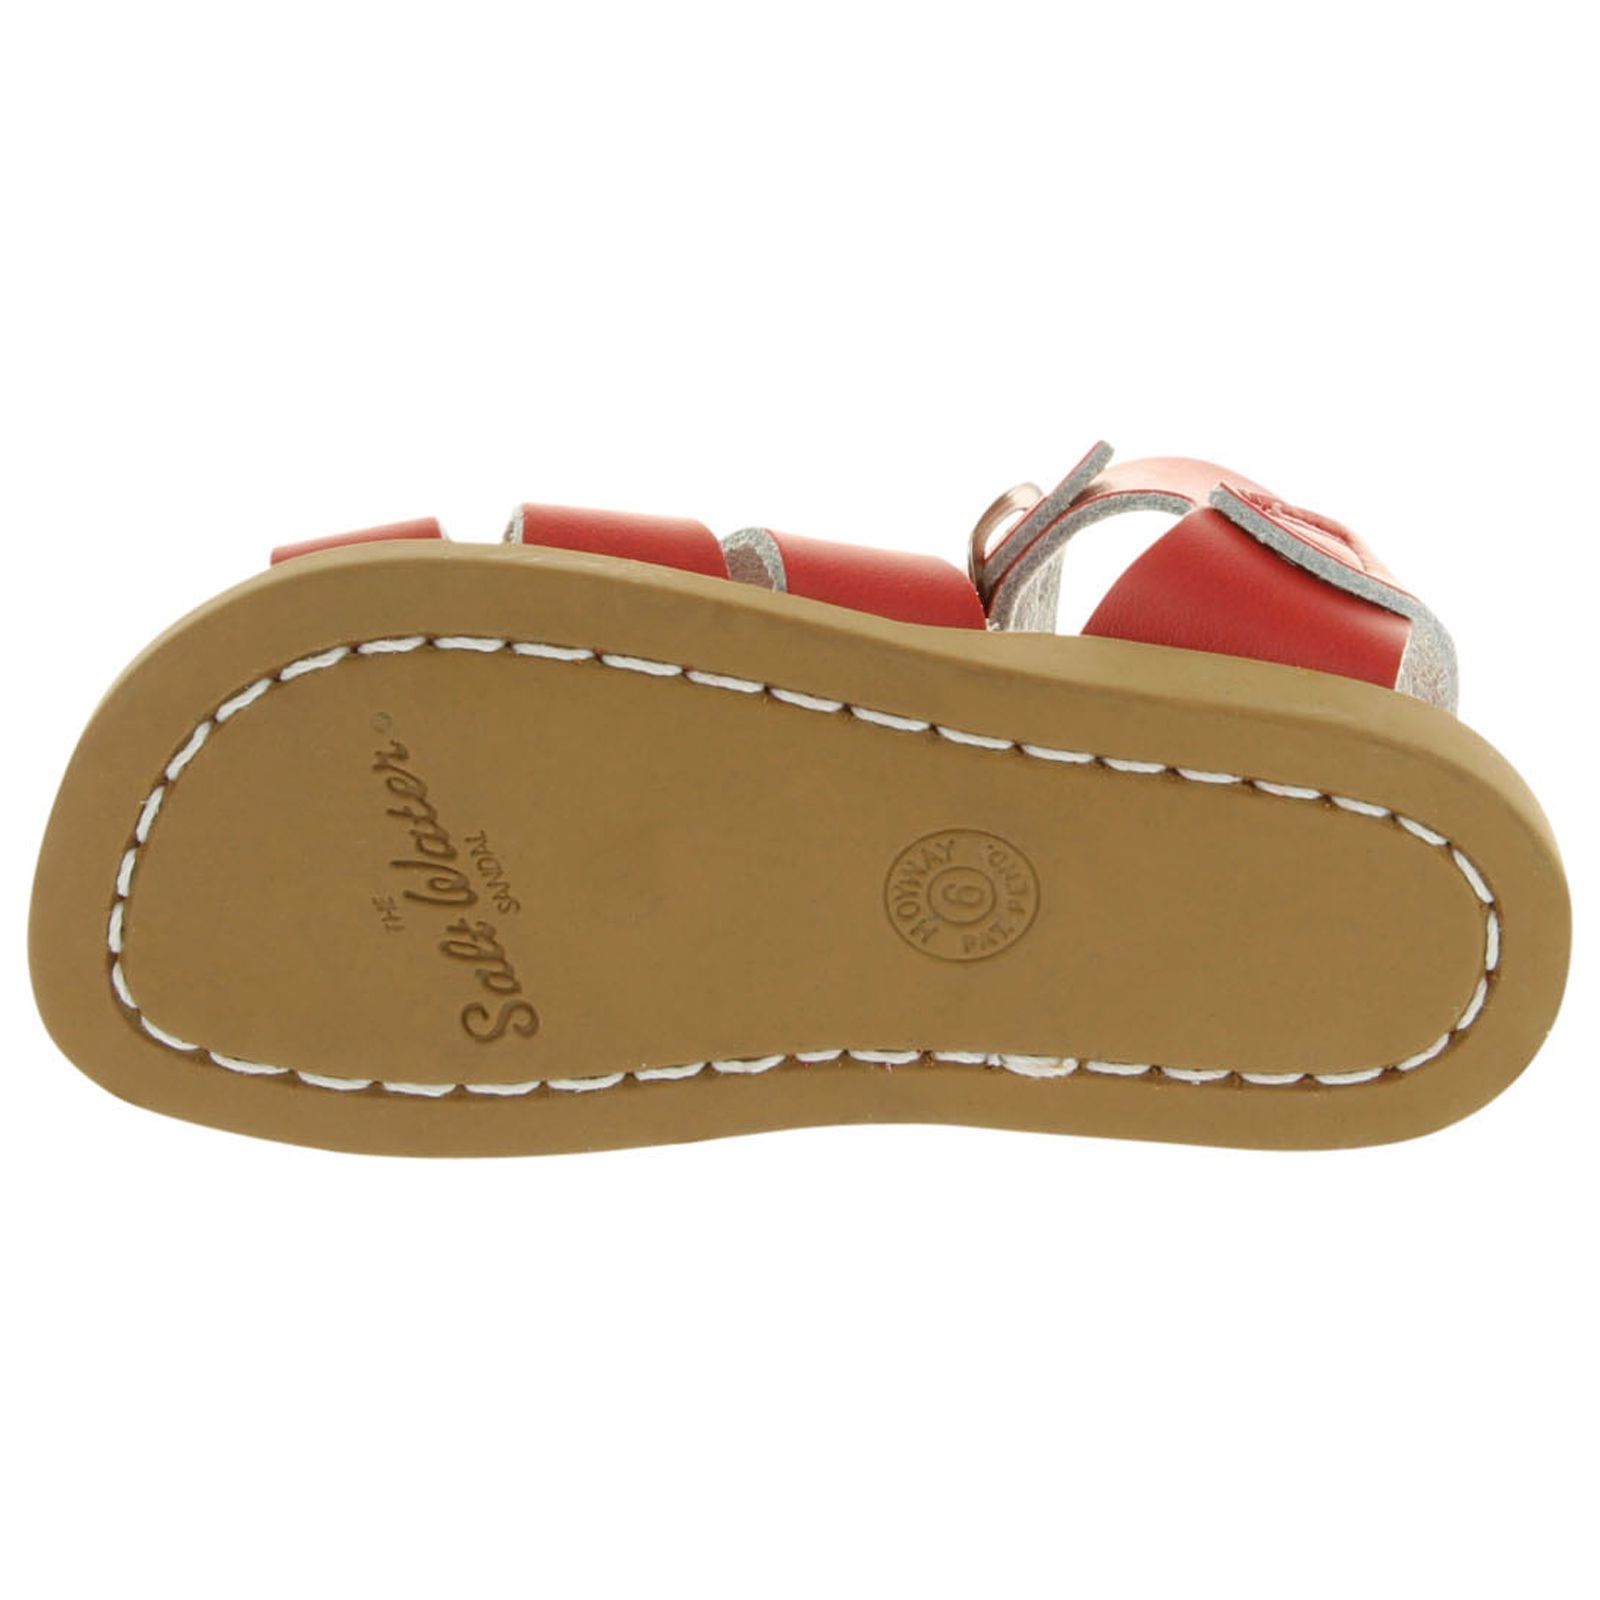 Salt Water Sandals by Hoy Shoe Original Sandal - Red - Little Kid 12 - 884-RED-12 - image 4 of 4